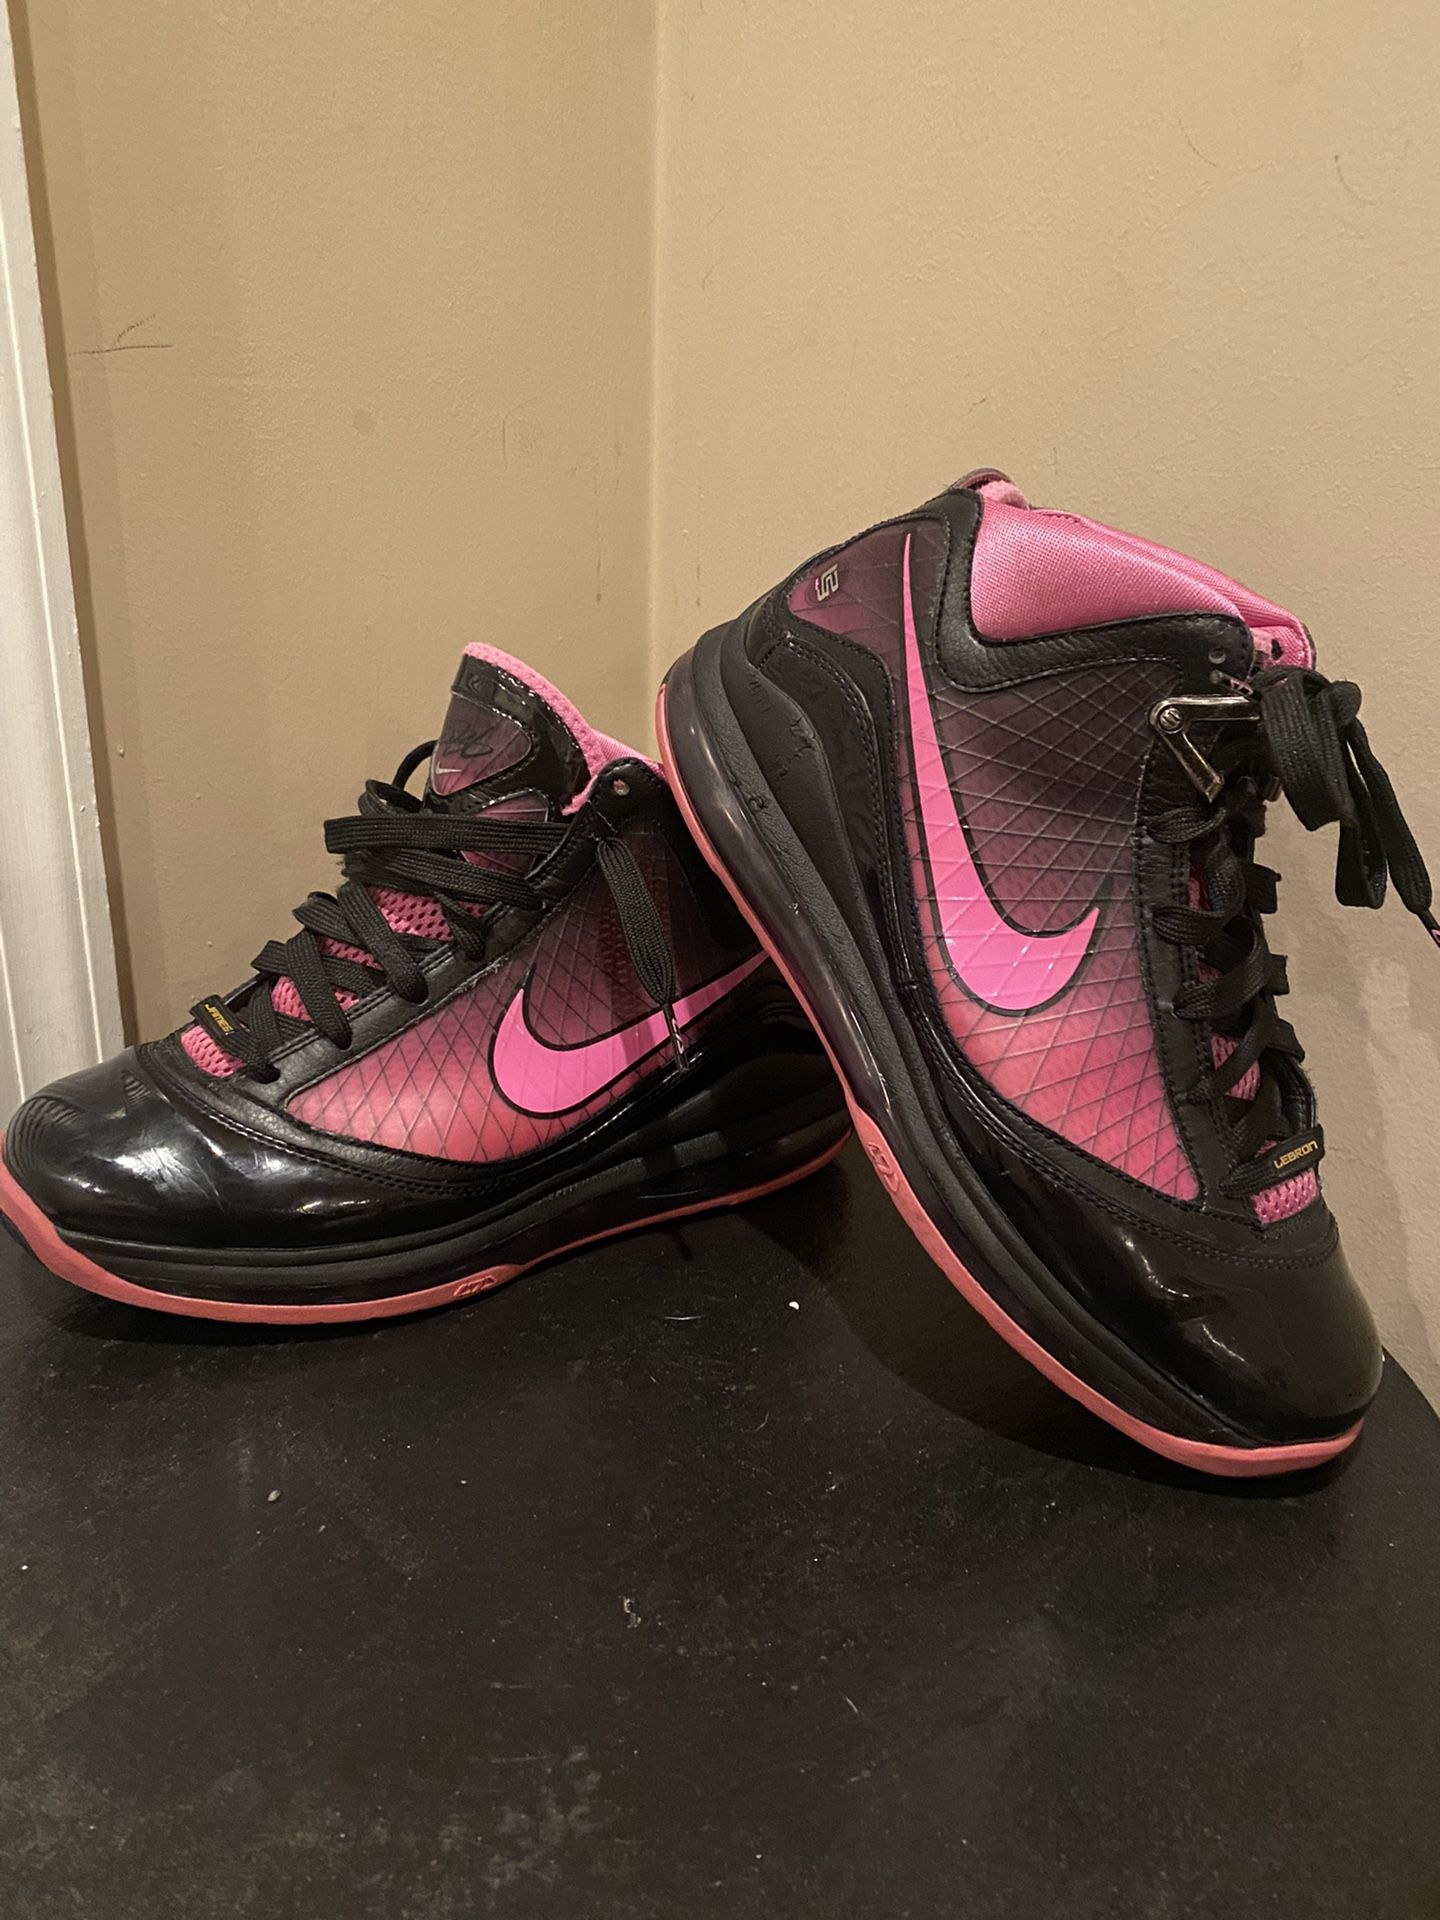 Nike Zoom LeBron Size US 7Y 375793-600 Pink/Black